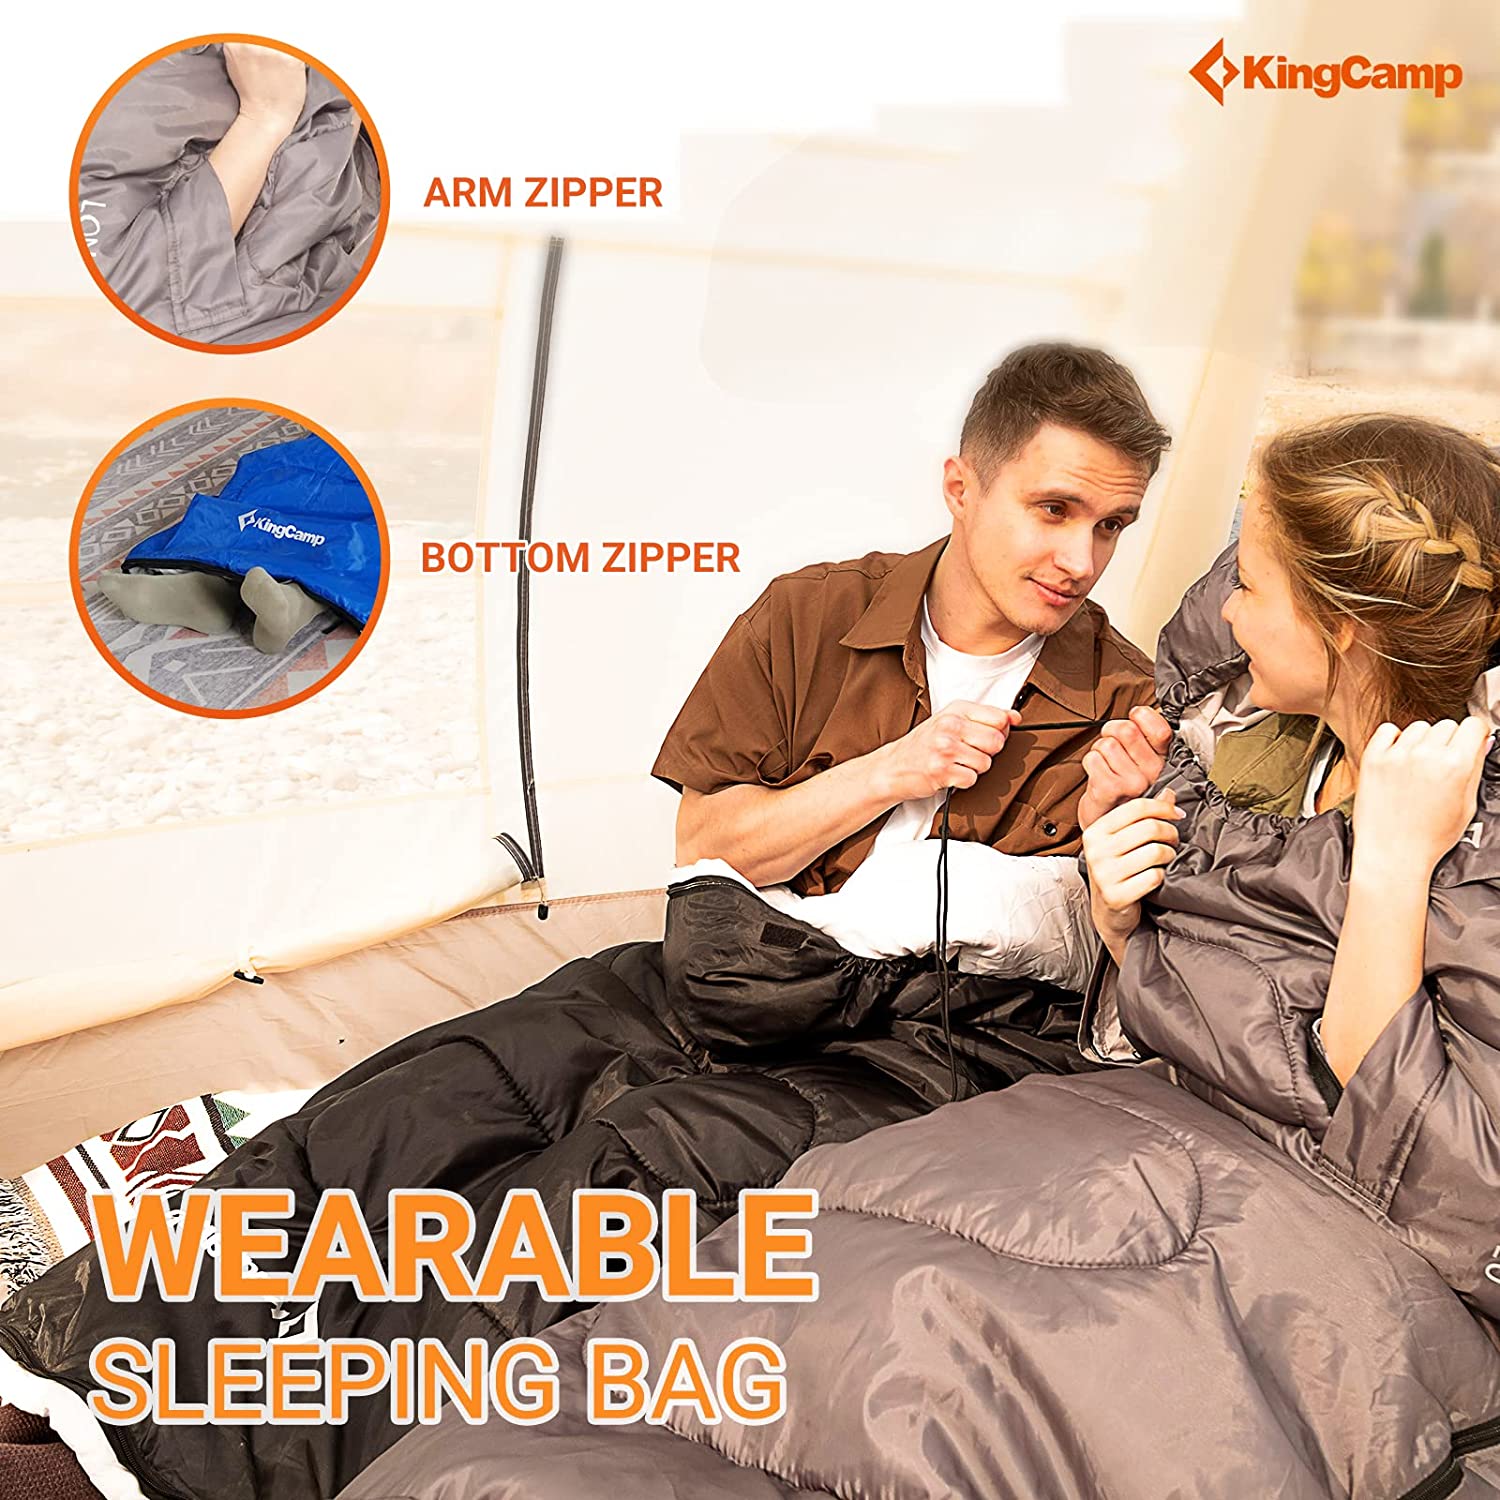 KingCamp Camping Sleeping Bag 3 Season Waterproof Lightweight Sleeping Bag for Adults(Blue,26.6℉-53.6℉) - image 5 of 7